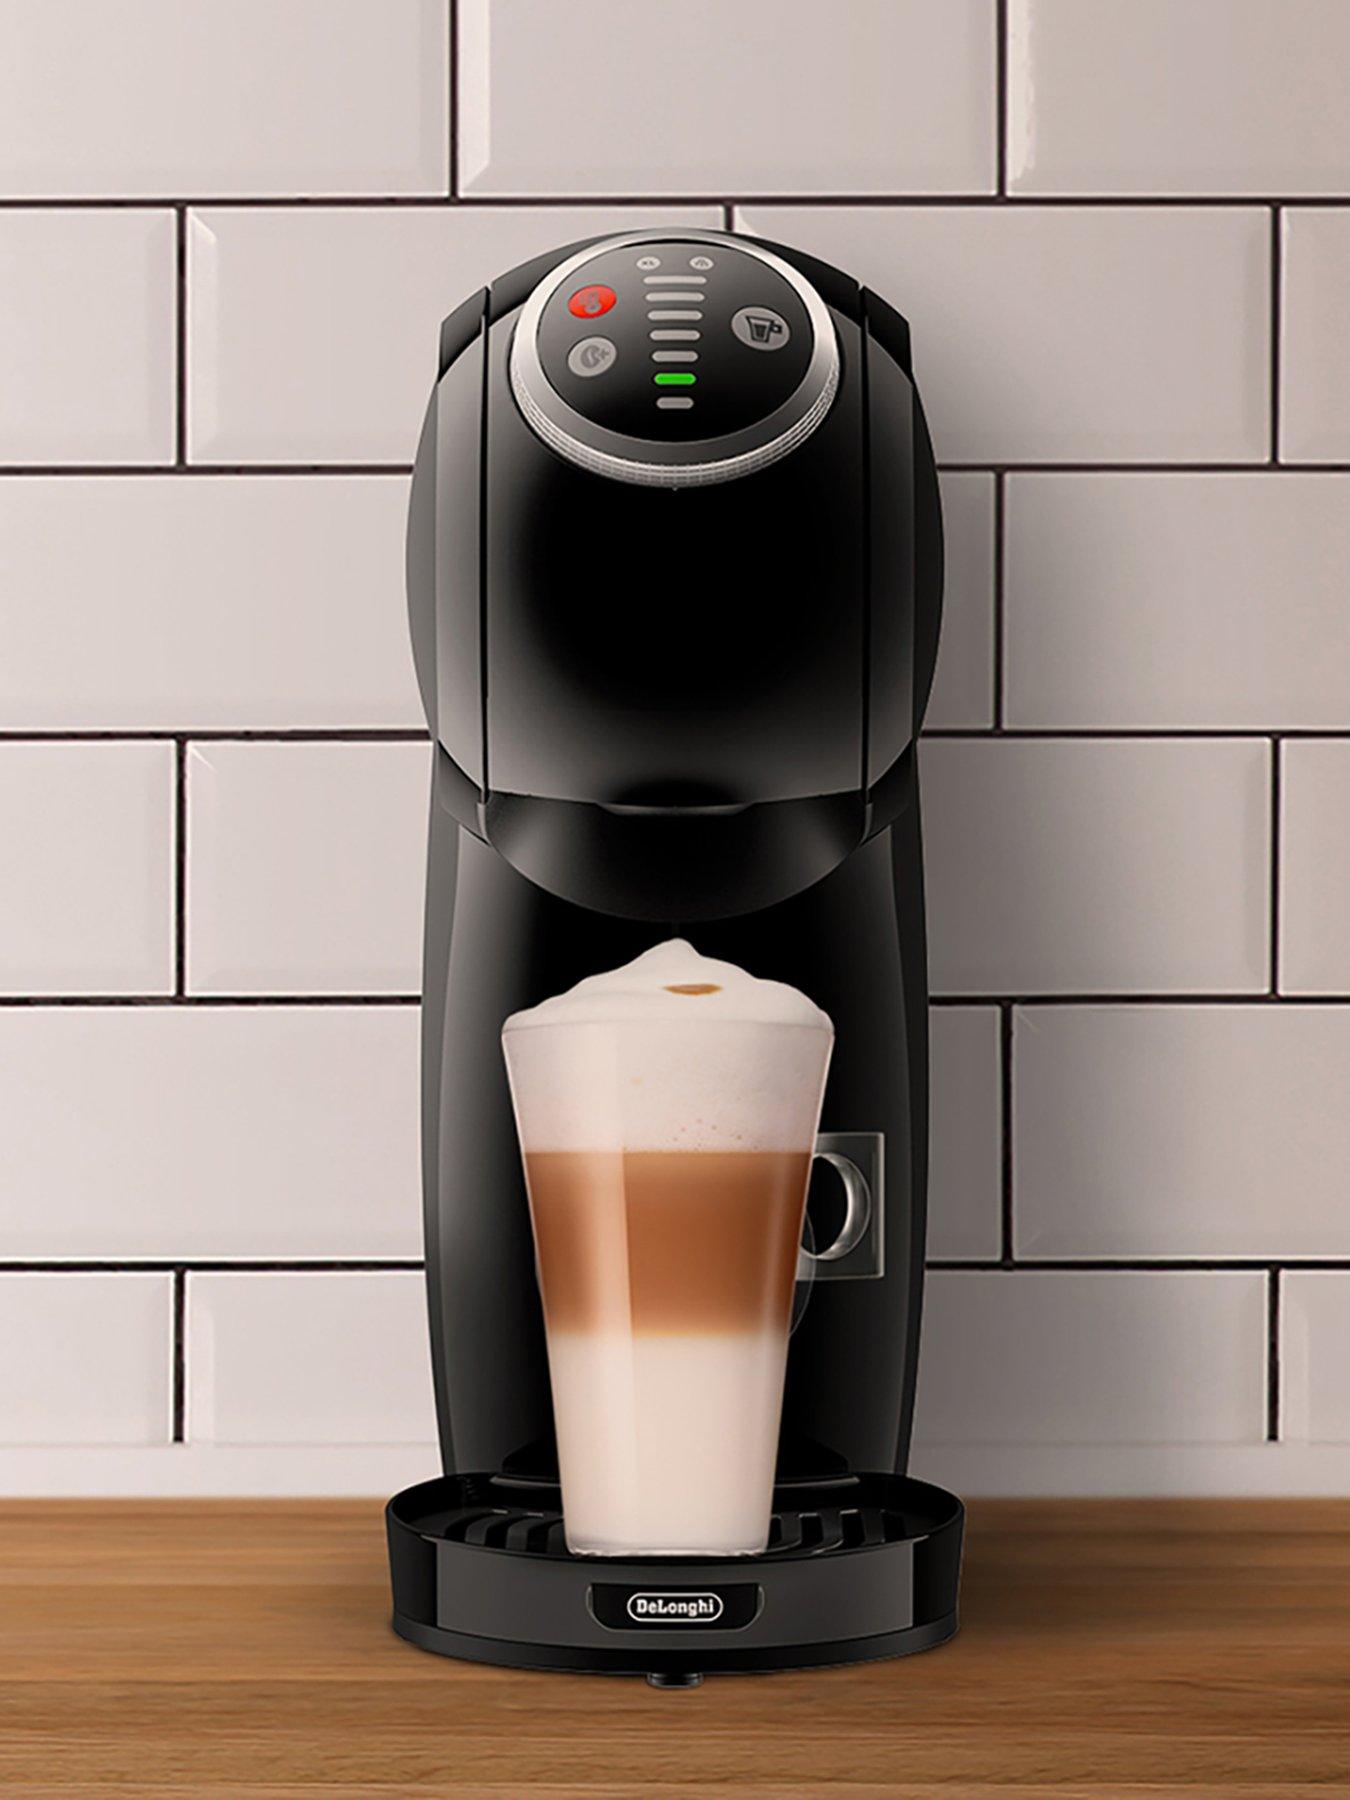 Nescafe Dolce Gusto Genio S Plus Coffee Machine by De'Longhi